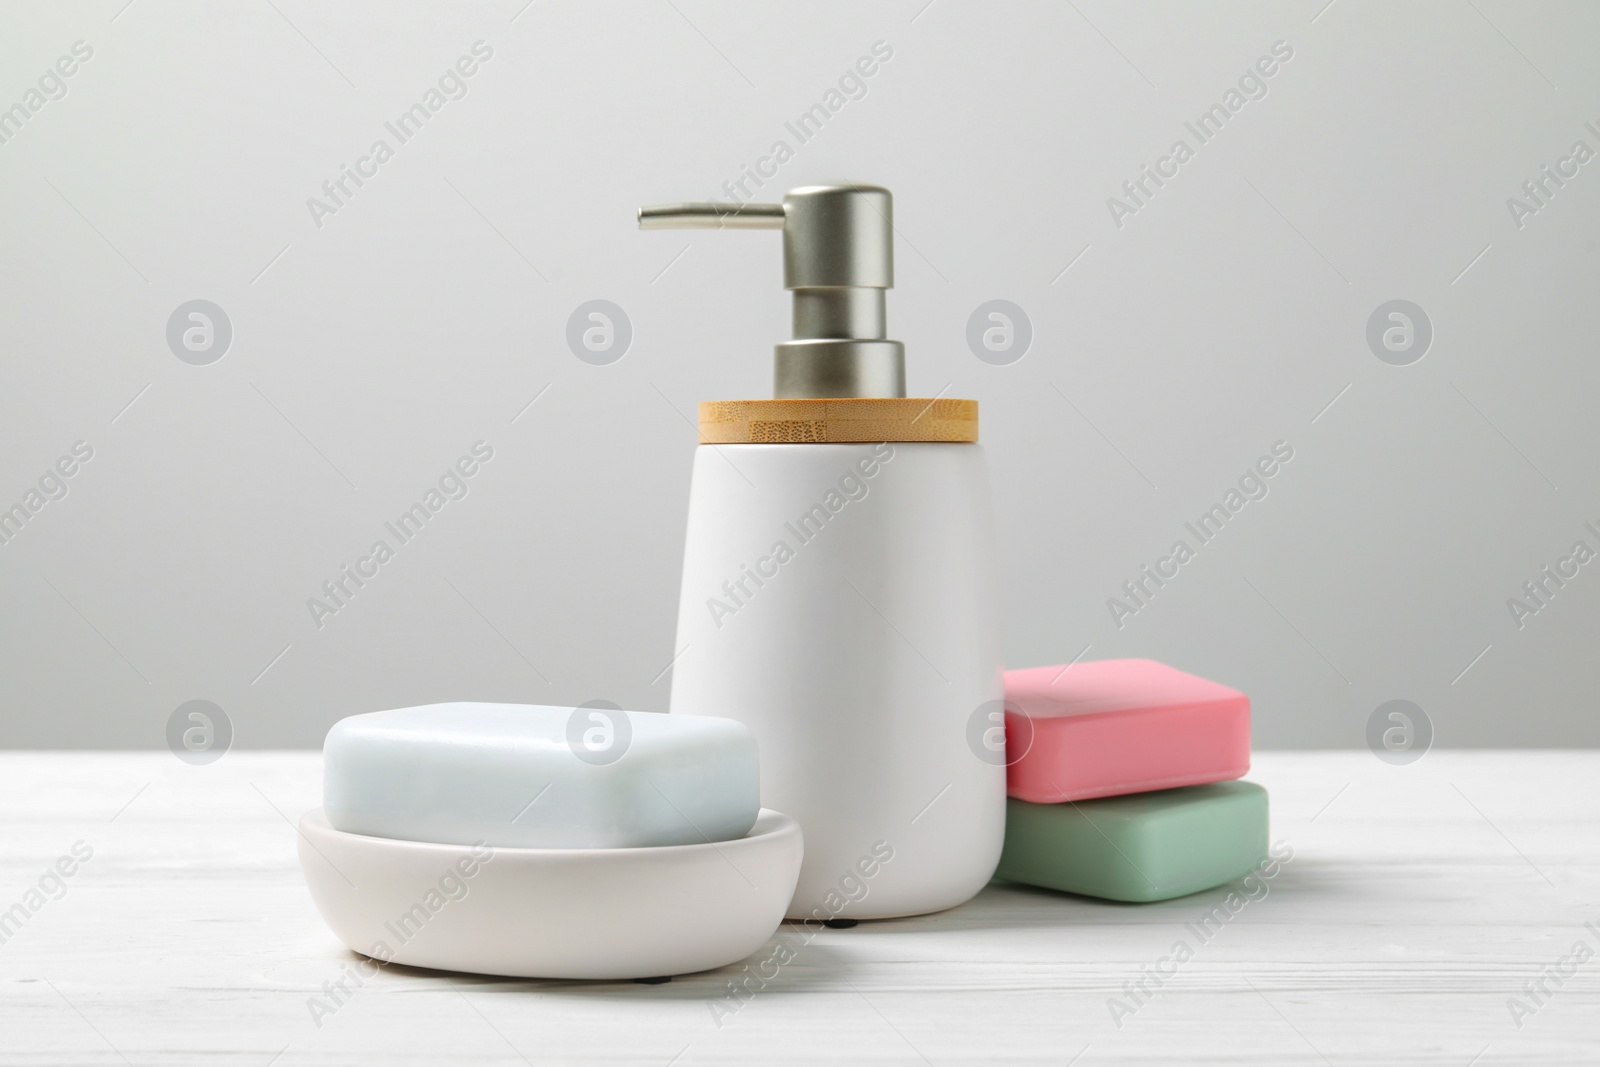 Photo of Soap bars and bottle dispenser on table against white background